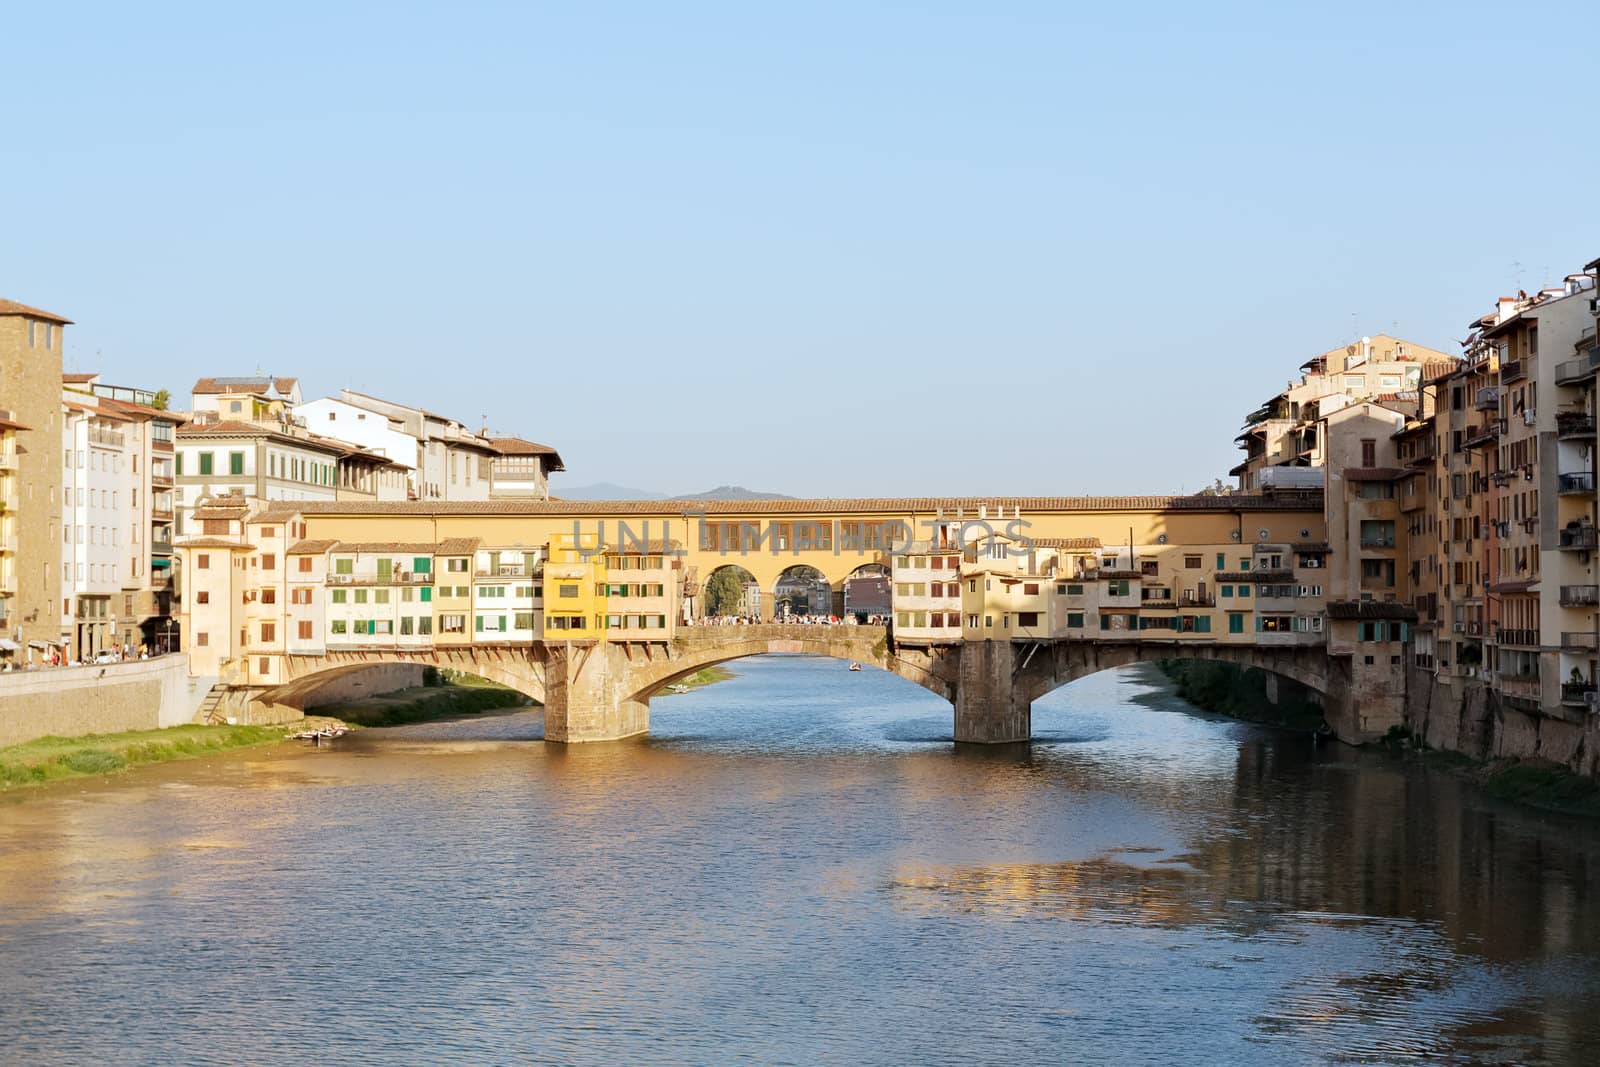 Bridge Ponte Vecchio in Florence, Italy.